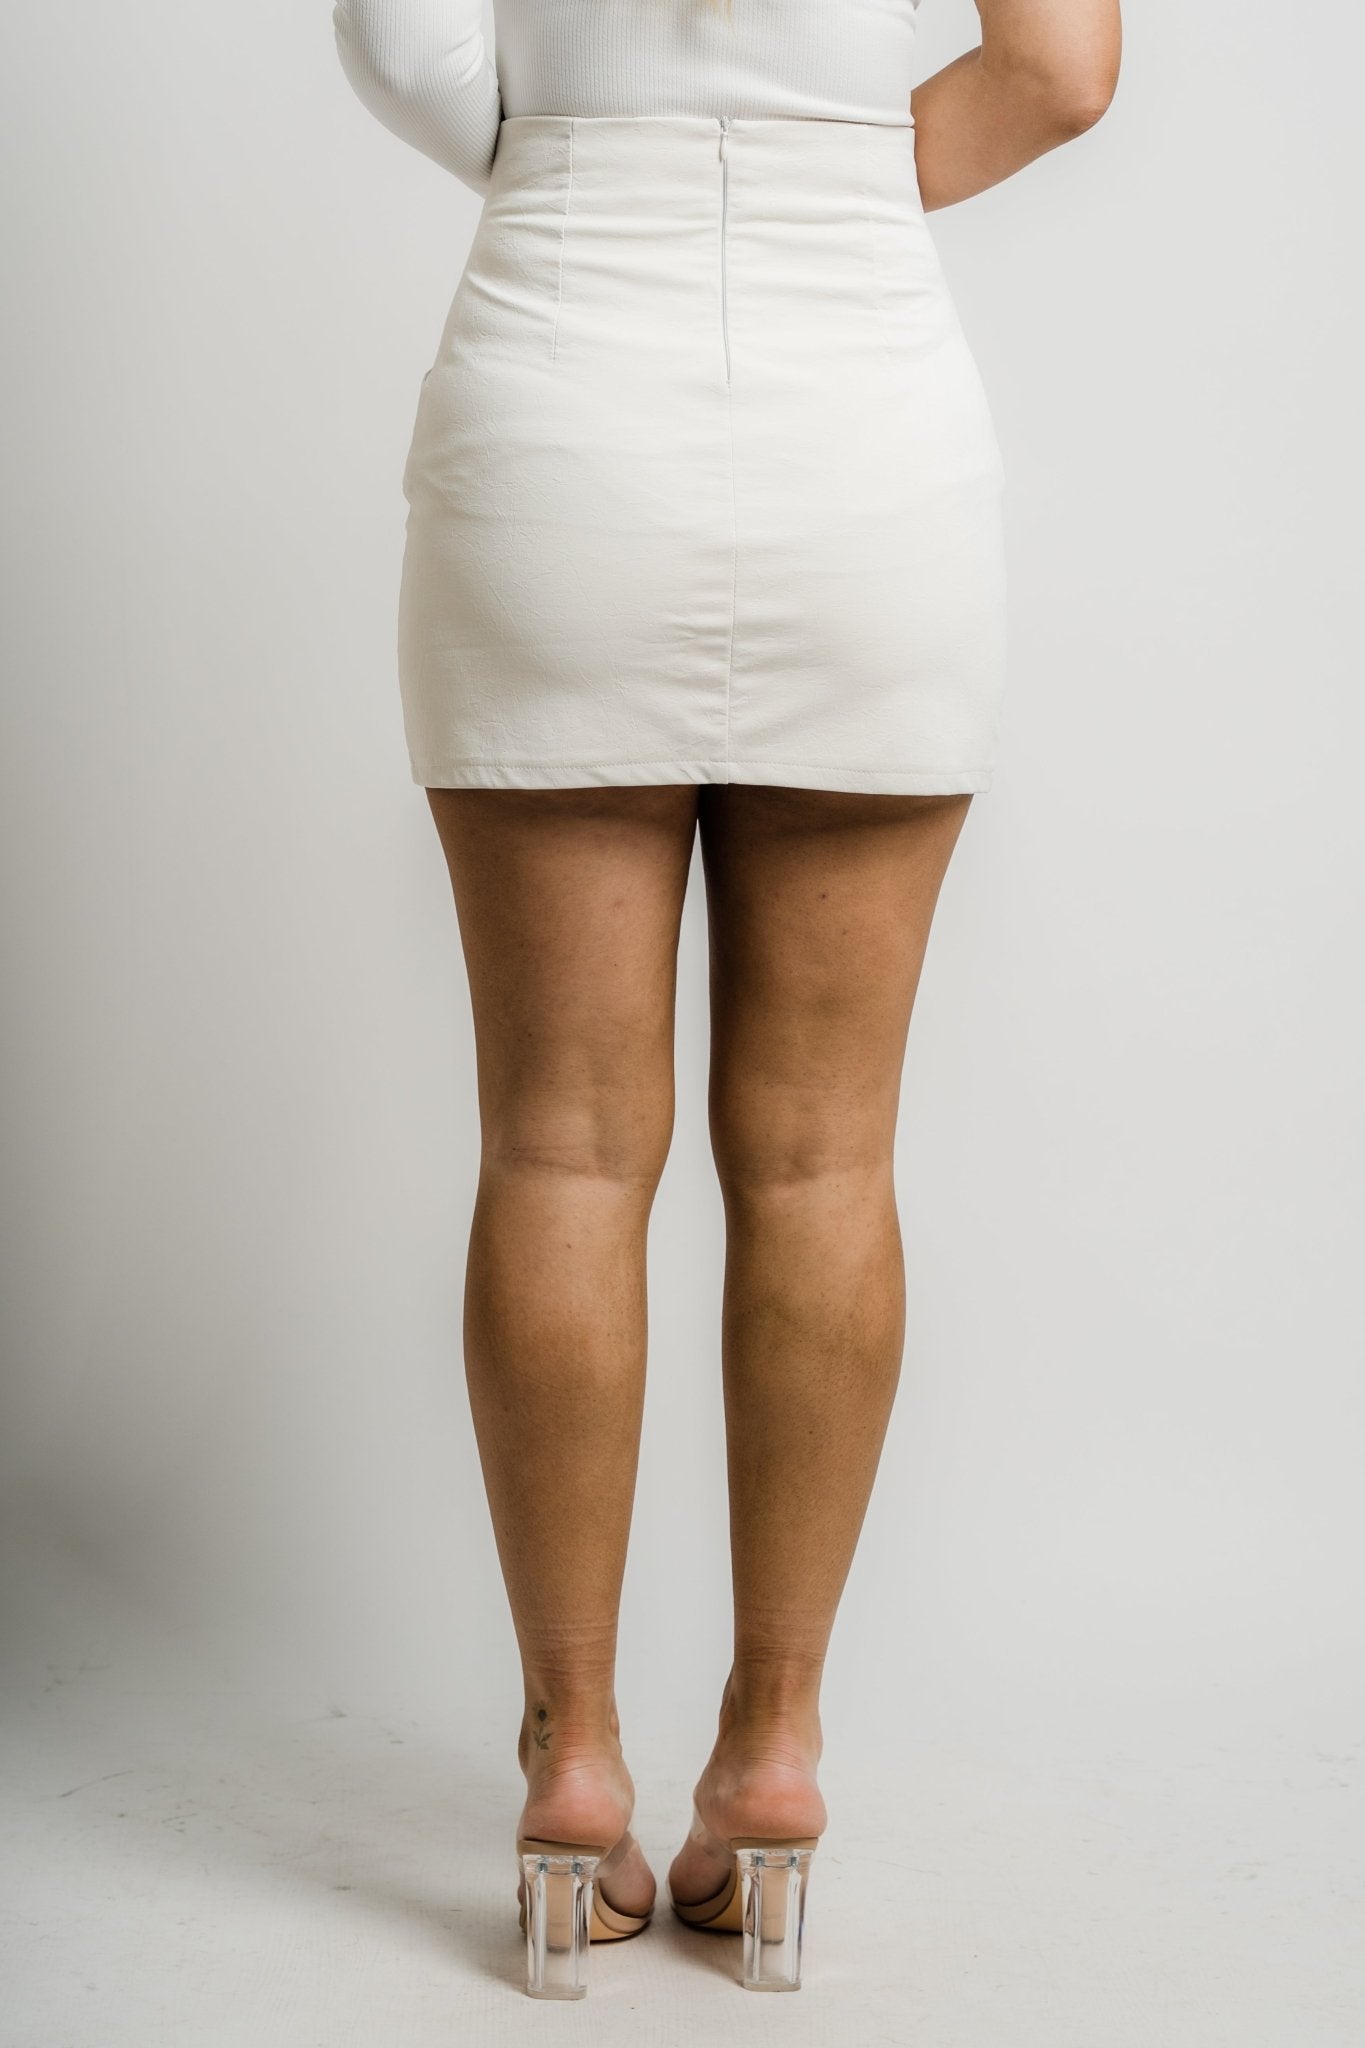 Faux leather mini skirt white - Adorable skirt - Unique Bridesmaid Ideas at Lush Fashion Lounge Boutique in Oklahoma